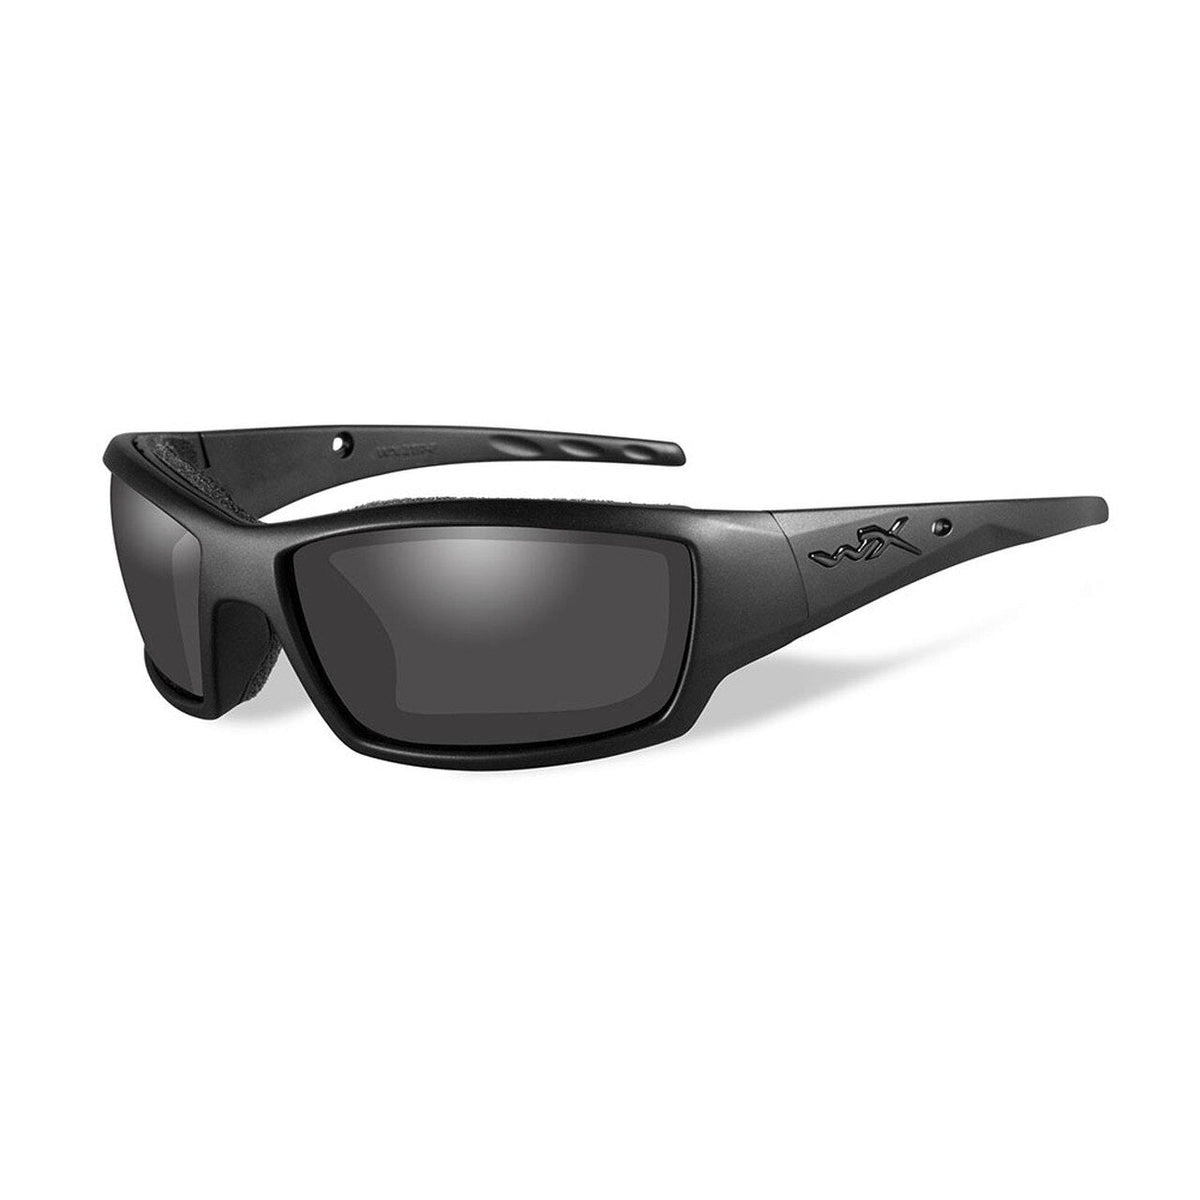 Wiley X Tide Sunglasses Smoke Grey Lens Matte Black Frame Eyewear Wiley X Tactical Gear Supplier Tactical Distributors Australia